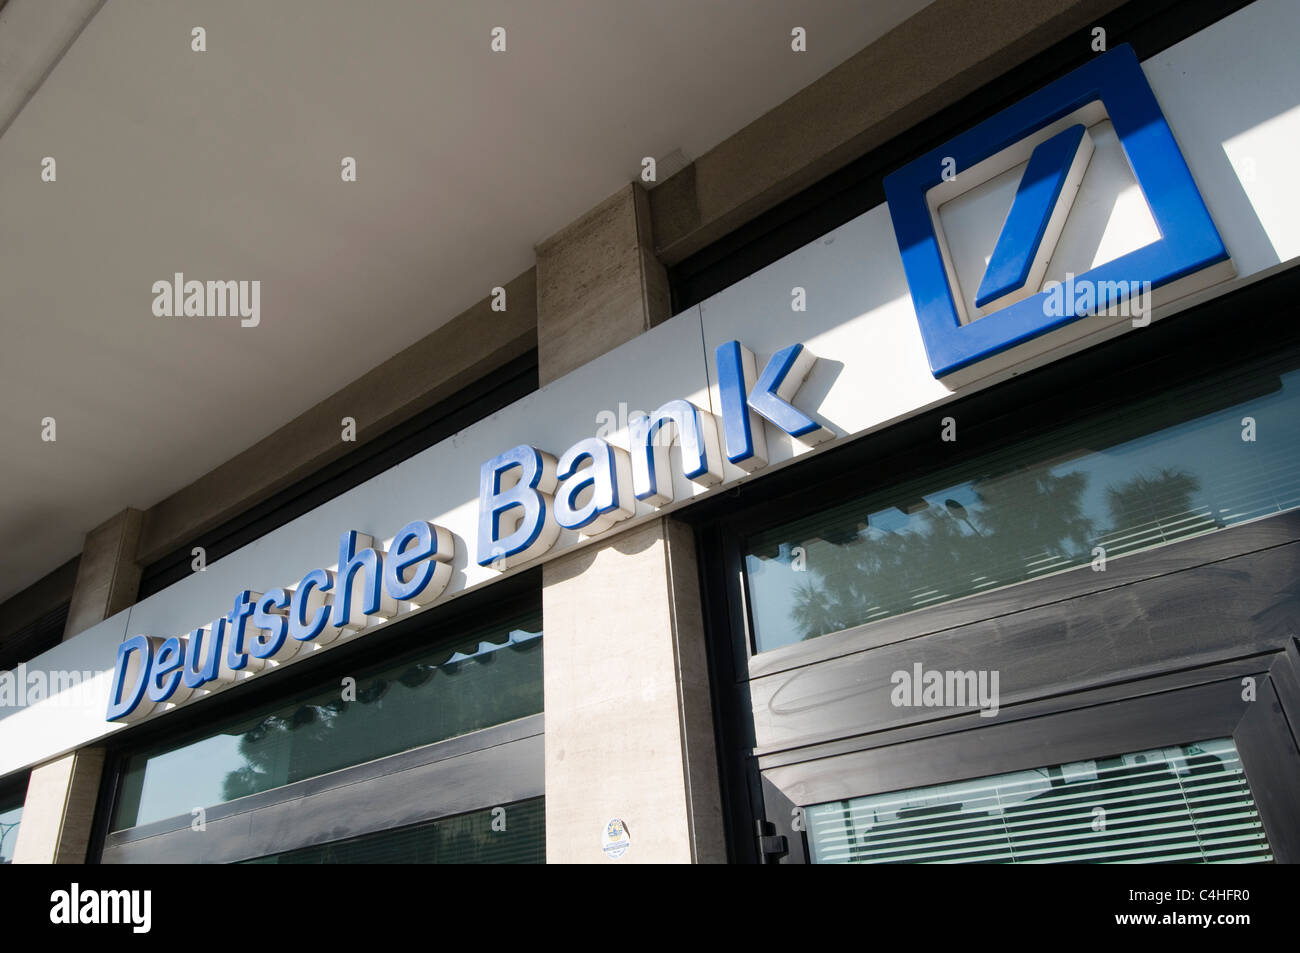 deutsche bank branch german high street banks banking sector european europe Stock Photo